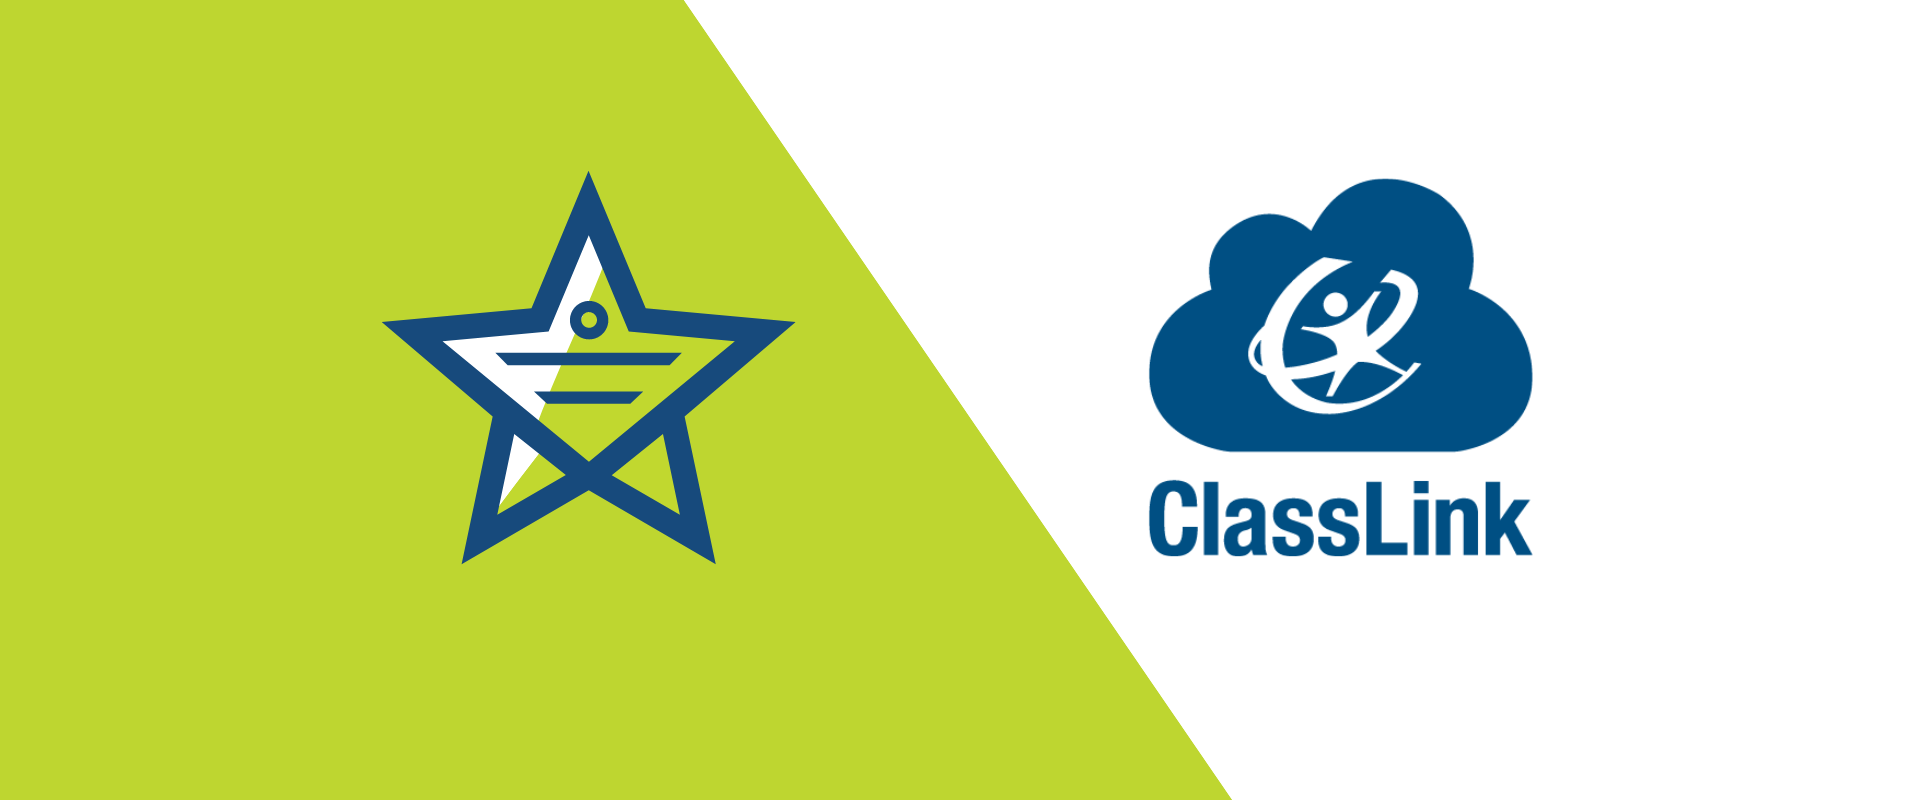 Mojo Helpdesk and ClassLink logos